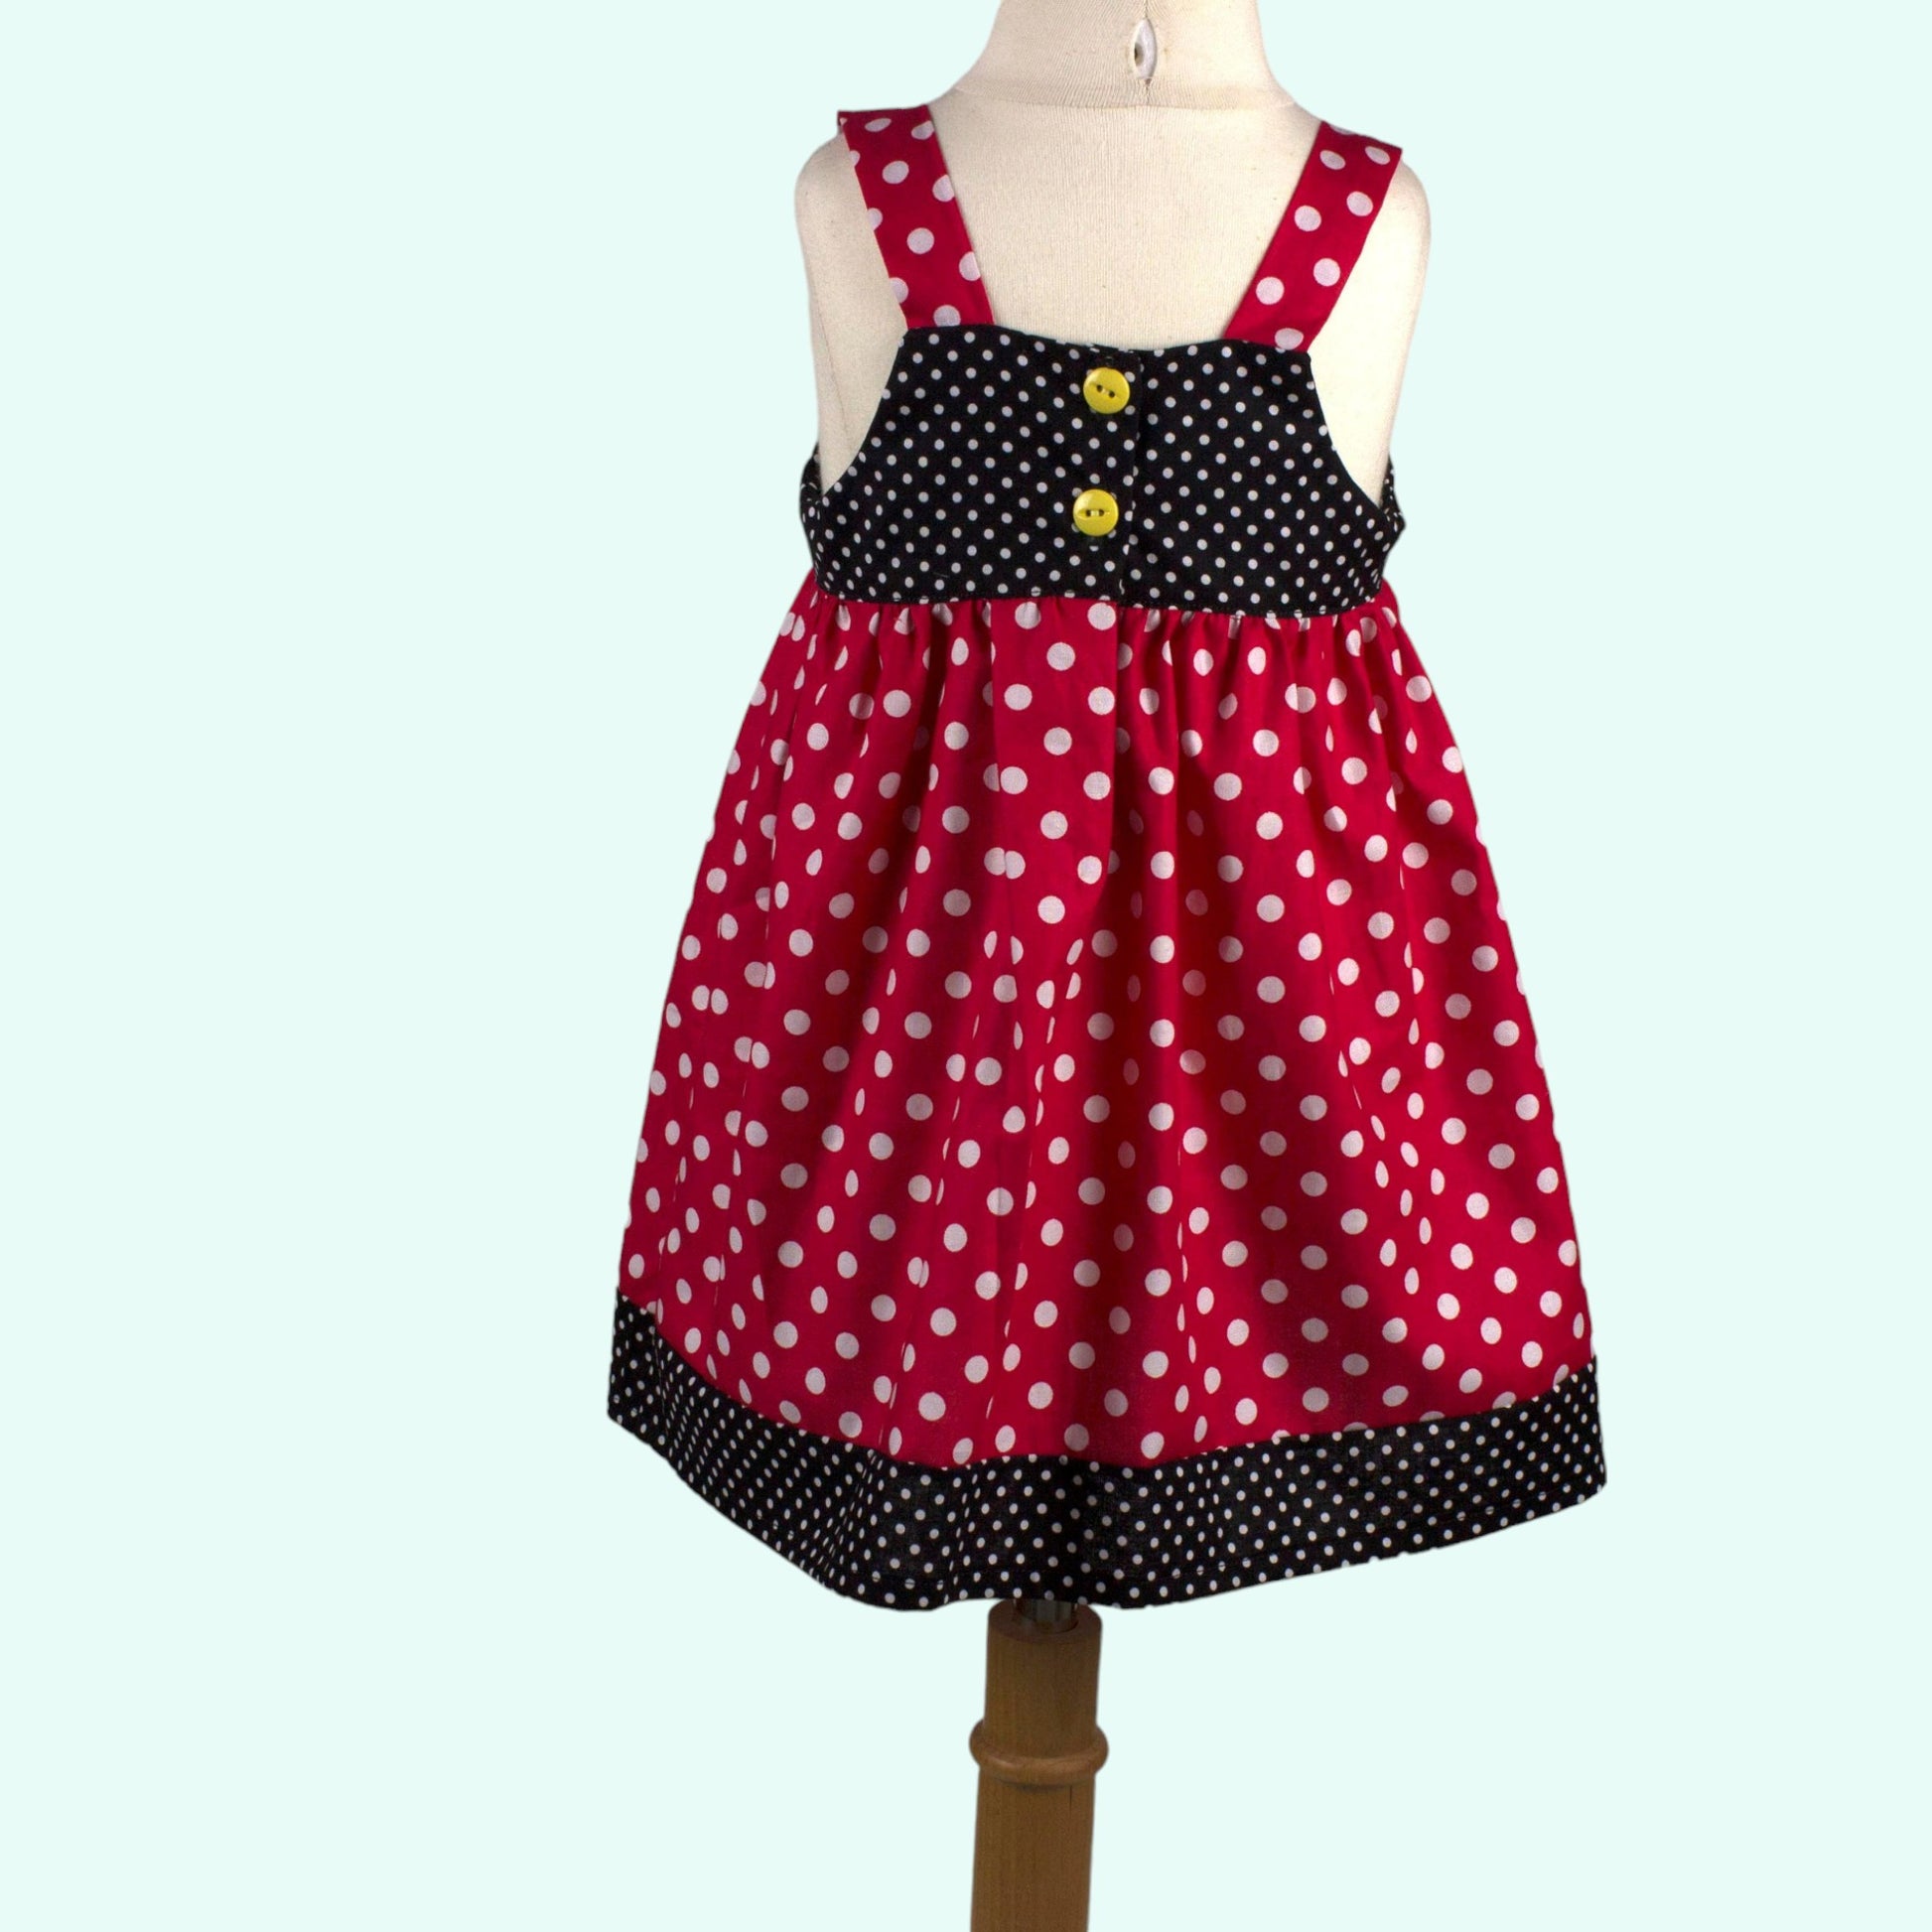 Minnie mouse dress